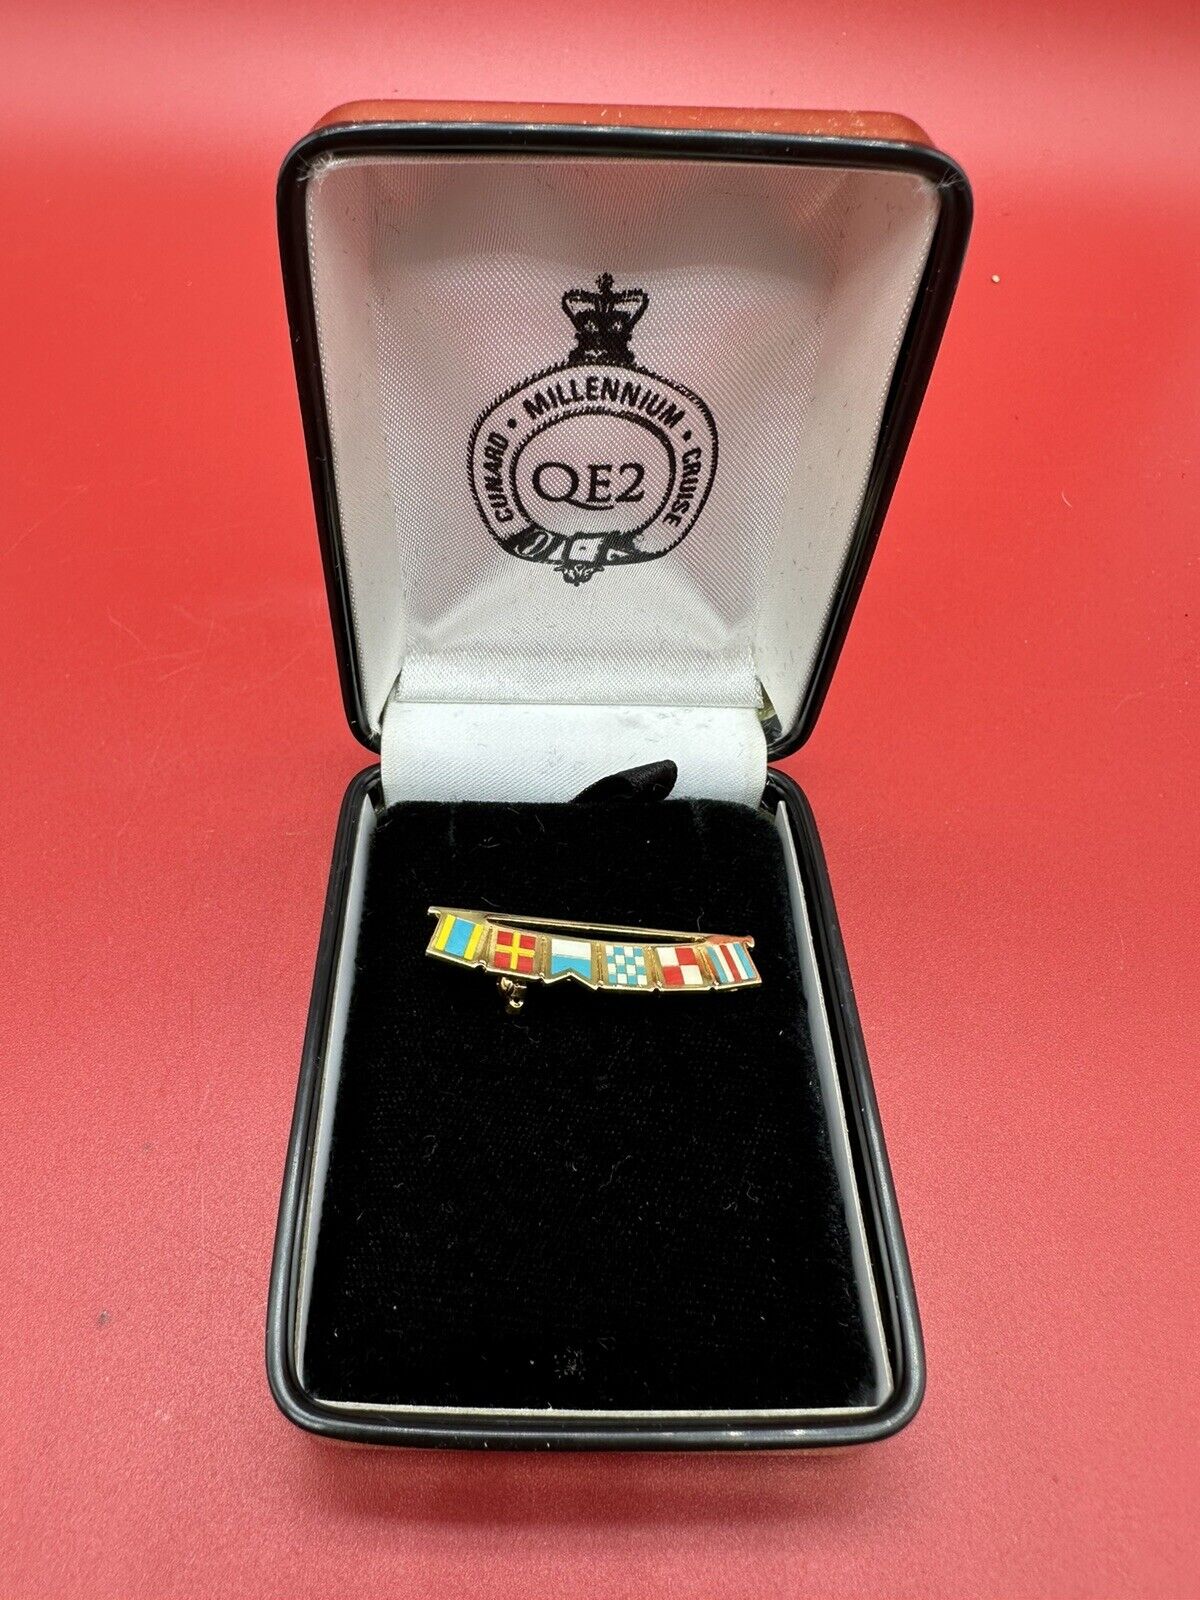 QE2 Queen Elizabeth 2 Millennium Cunard Cruise Ocean Liner Pin In Original Box